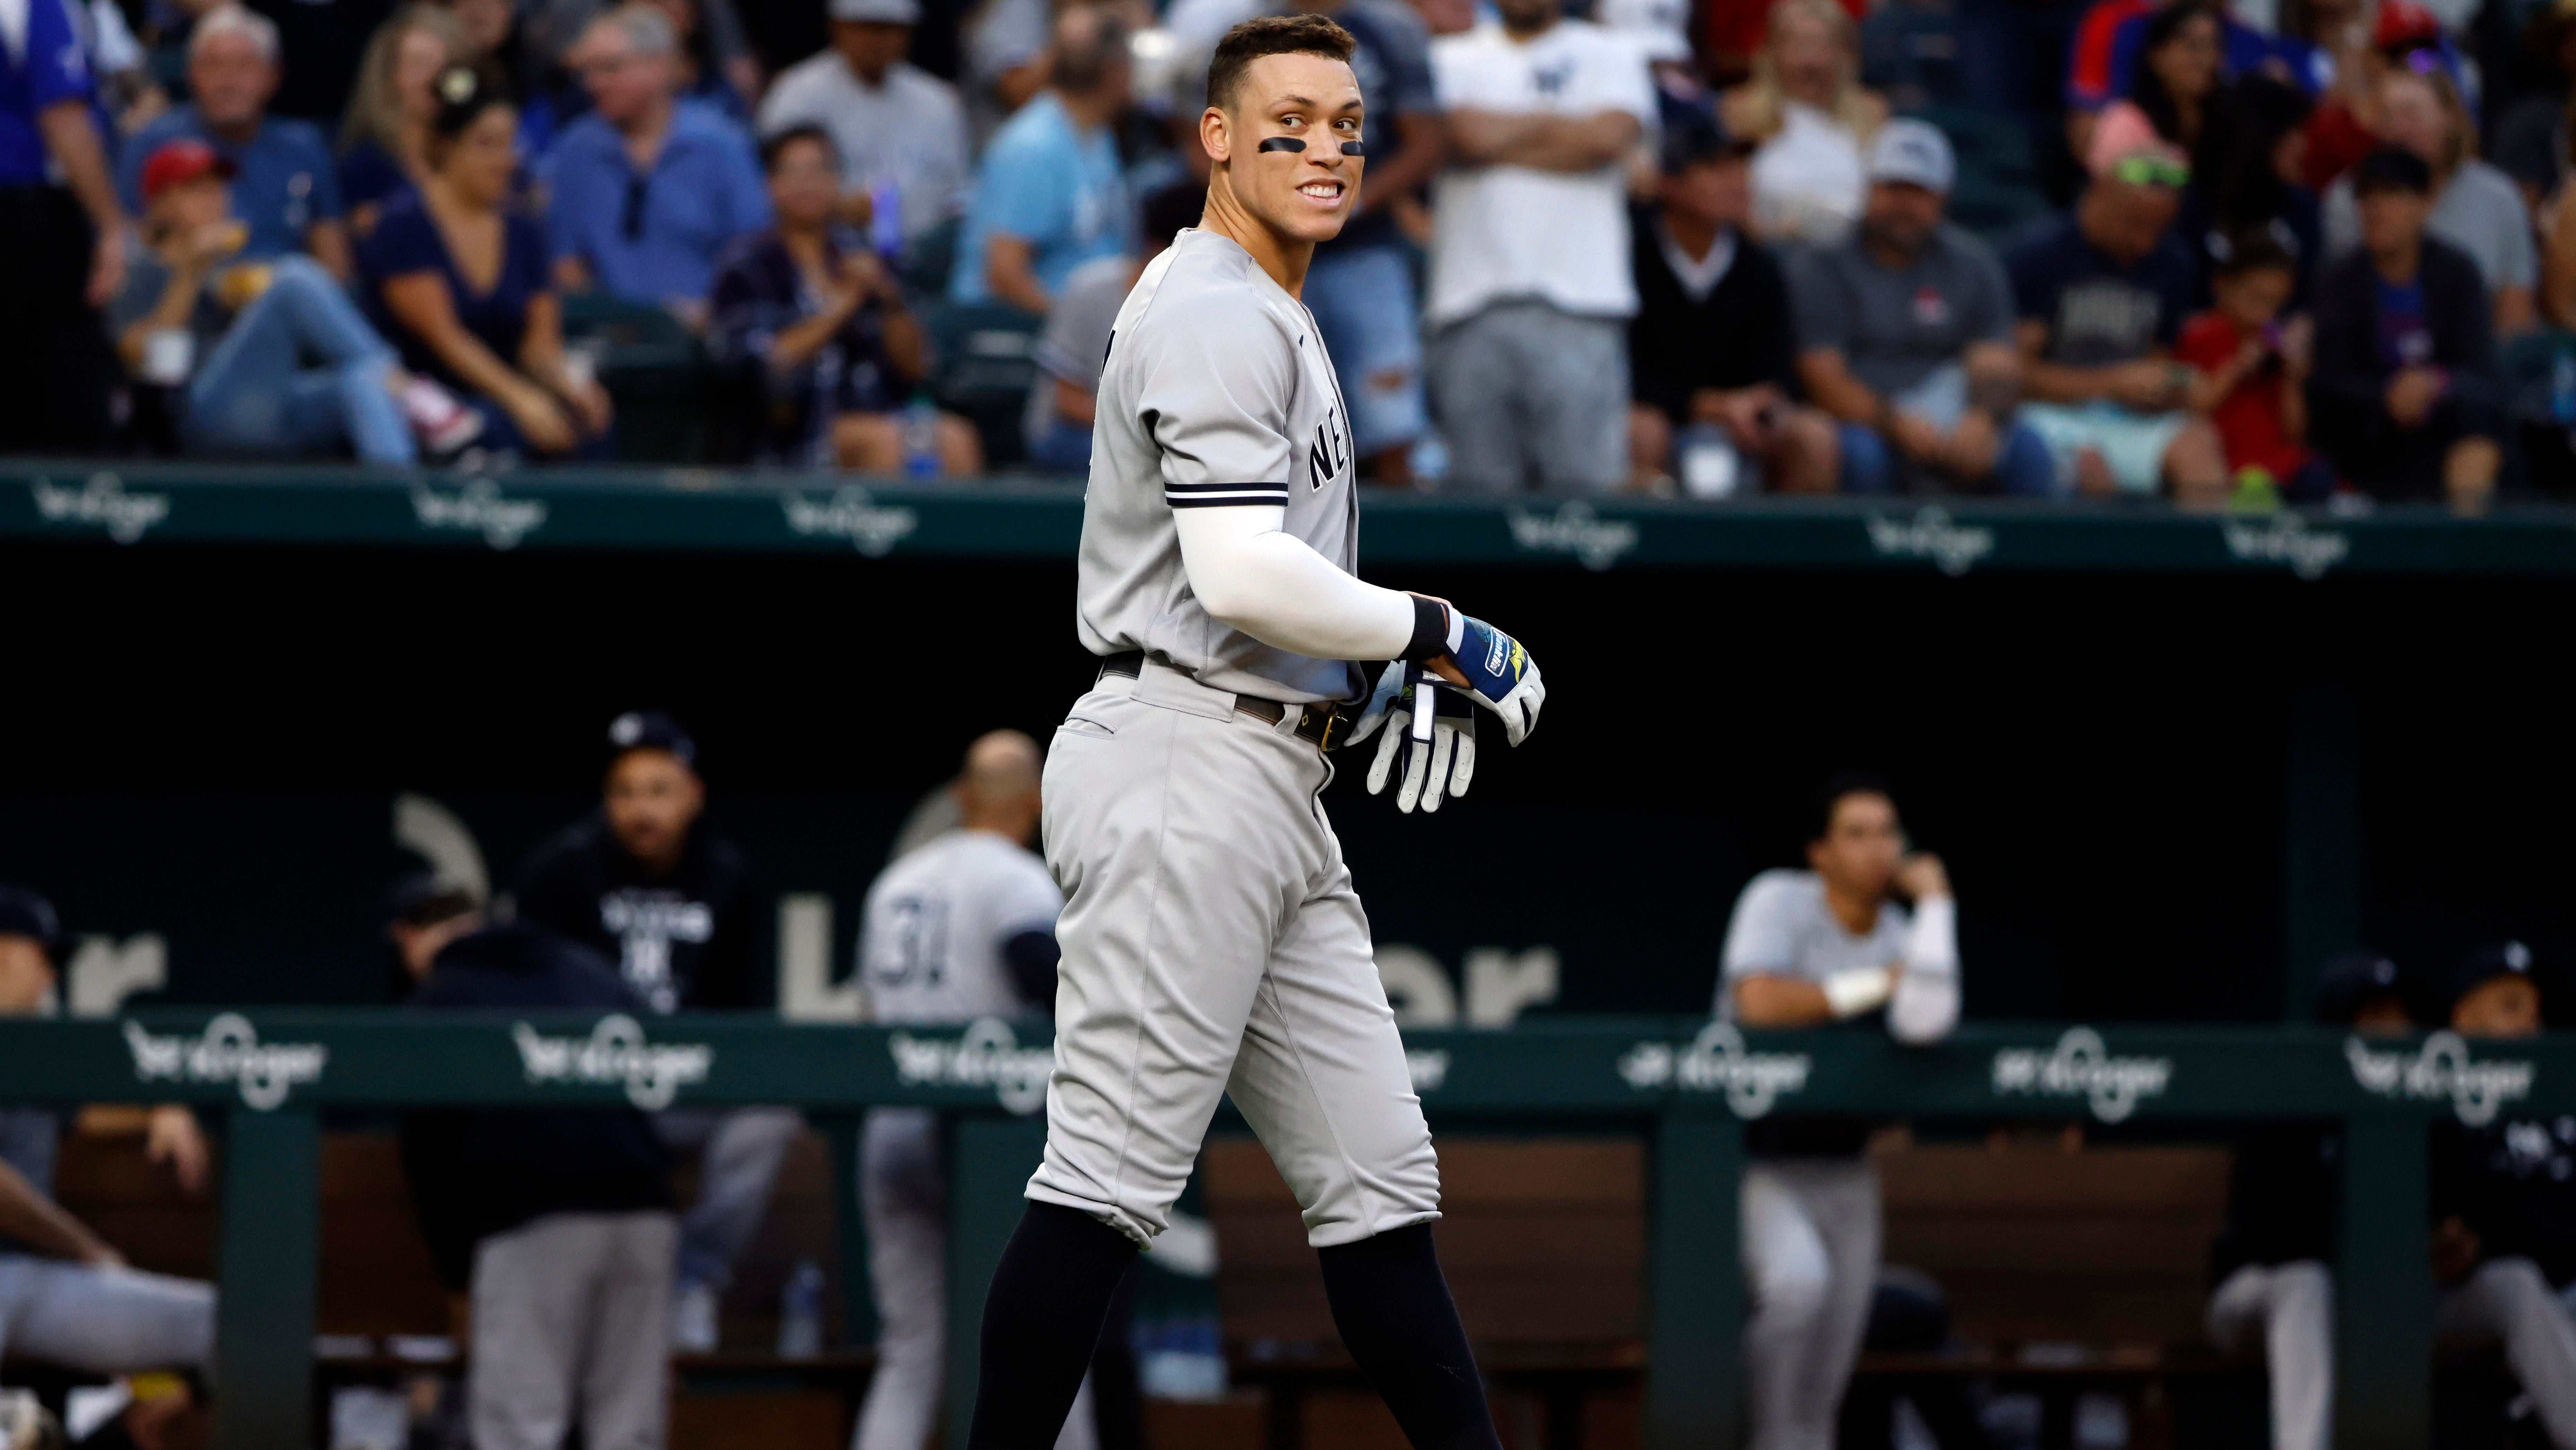 Aaron Judge home run watch: Tracking the Yankees slugger in 2022